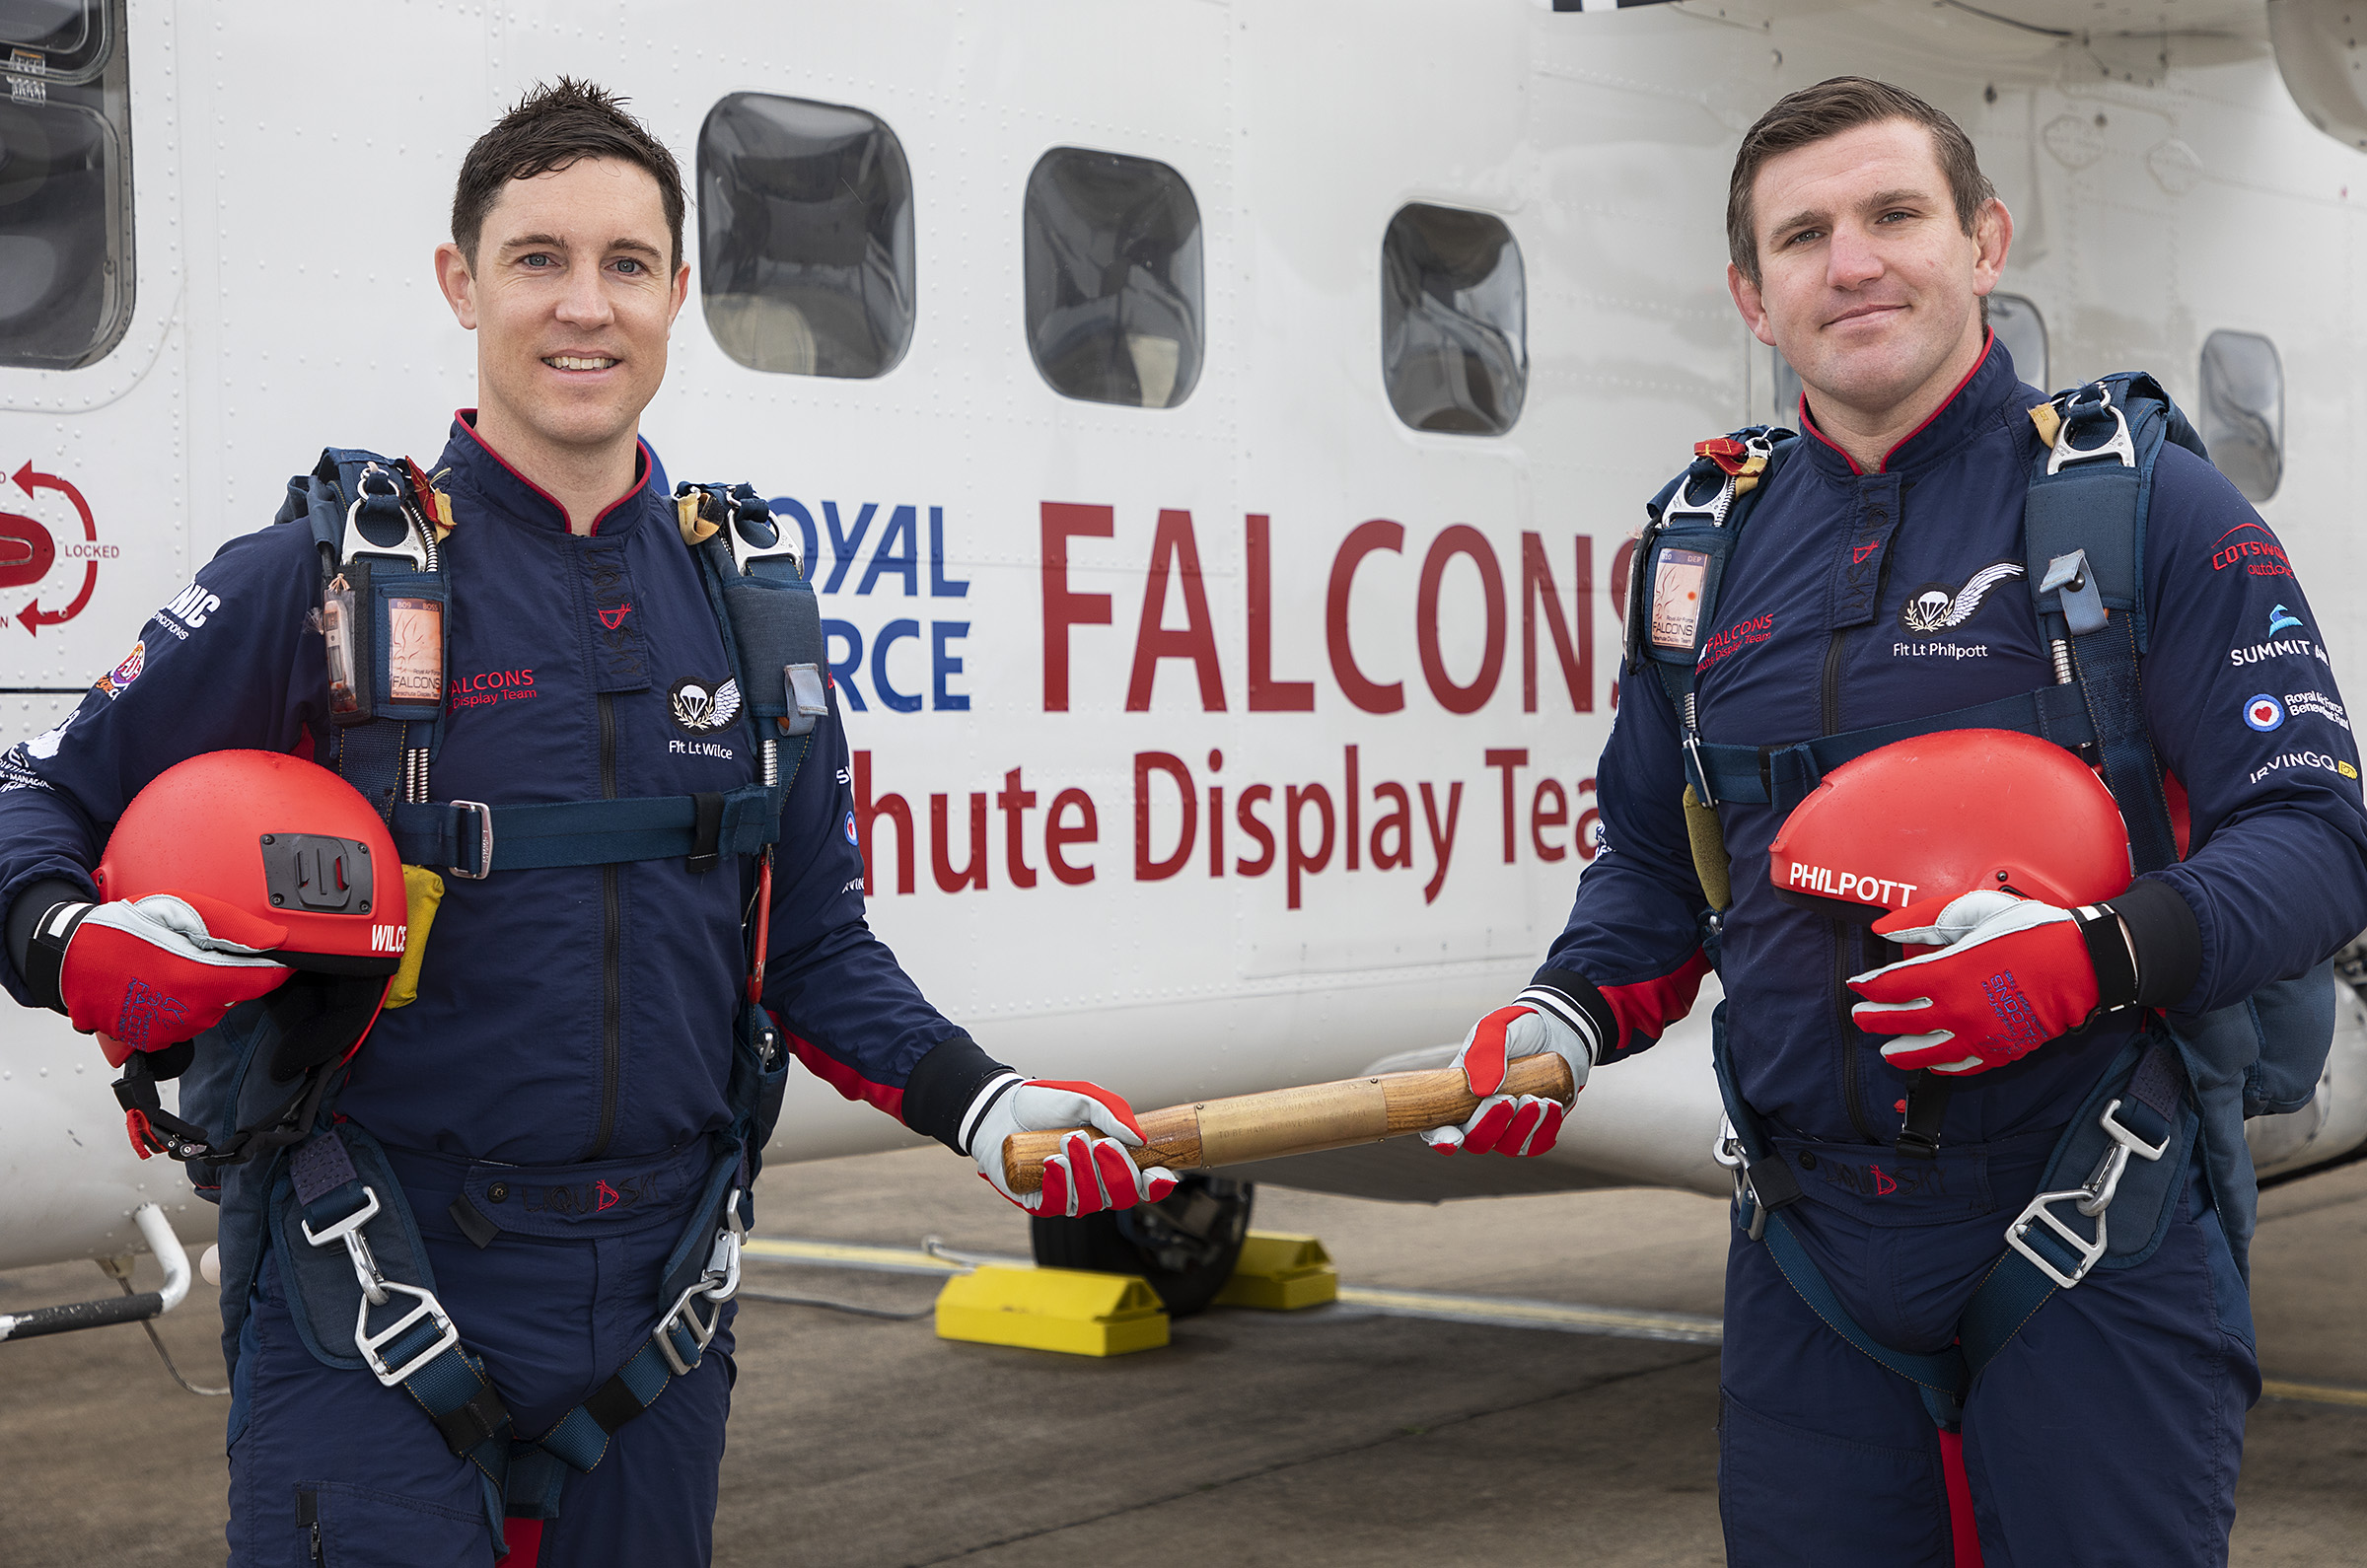 The Royal Air Force Falcons Parachute Display Team bid a fond farewell to Flight Lieutenant Chris Wilce as he handed over the reigns to Flight Lieutenant Stuart Philpott